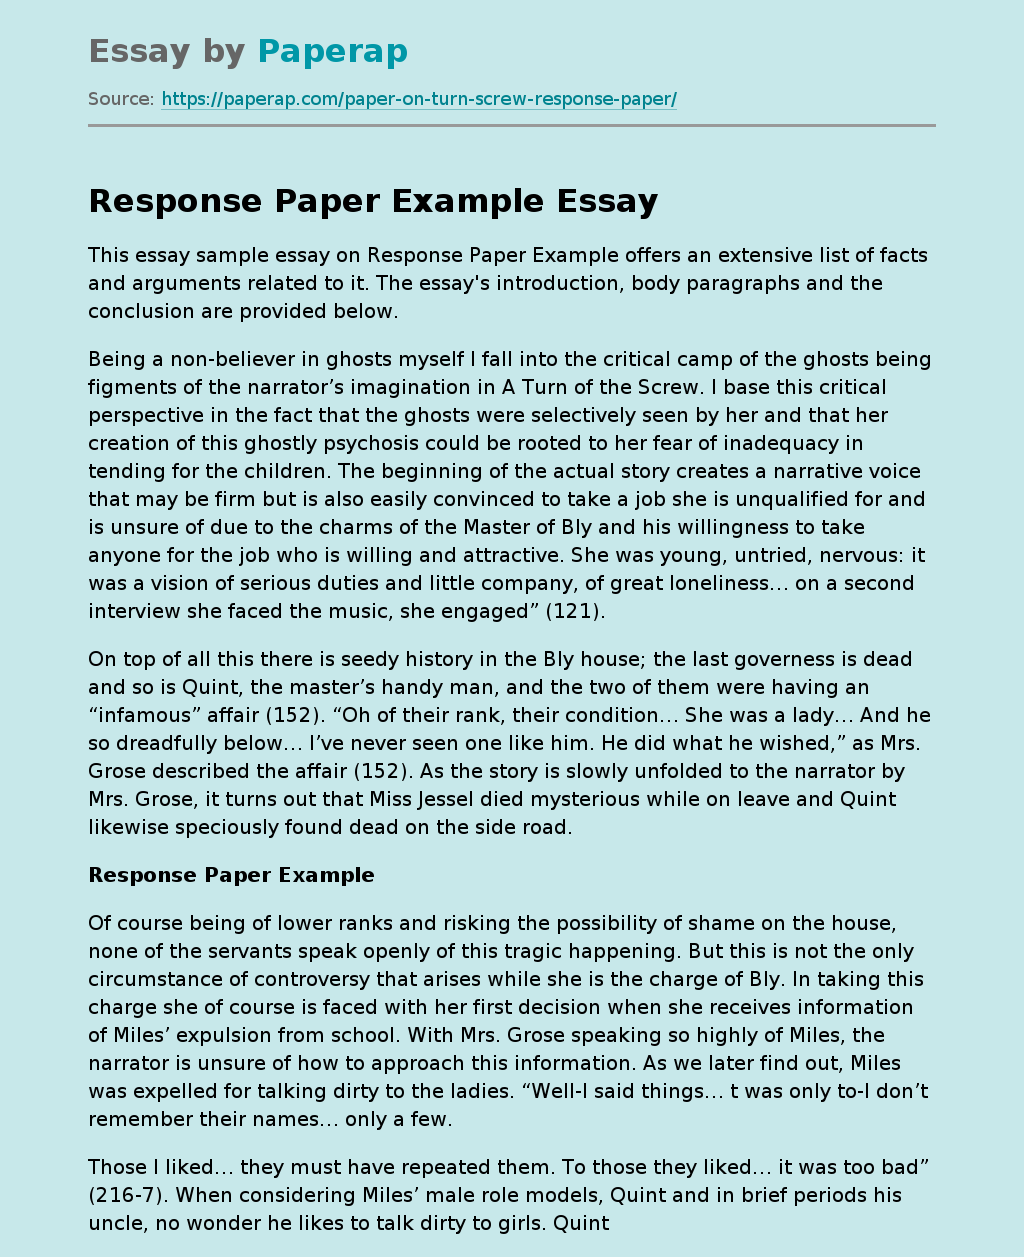 Response Paper Example